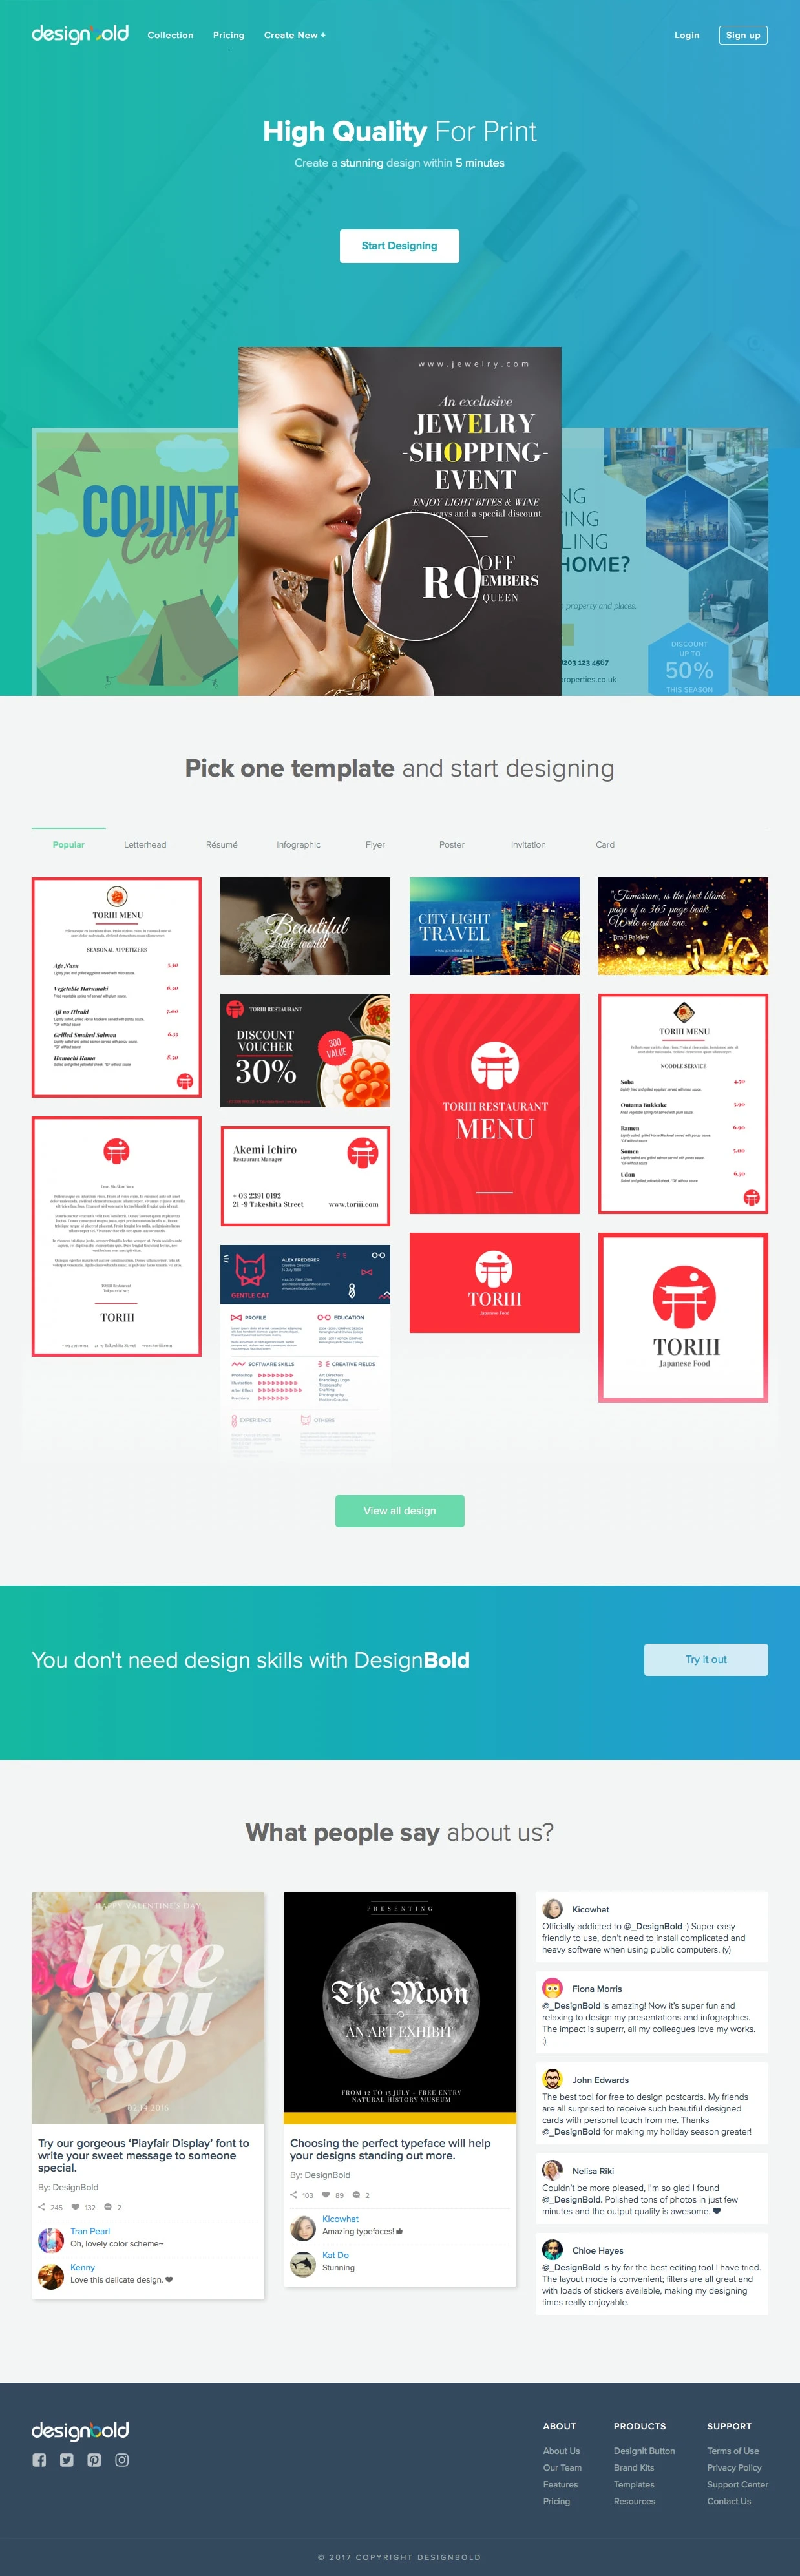 DesignBold Landing Page Example: Amazing Photo Editor and Designer Studio at your fingertips